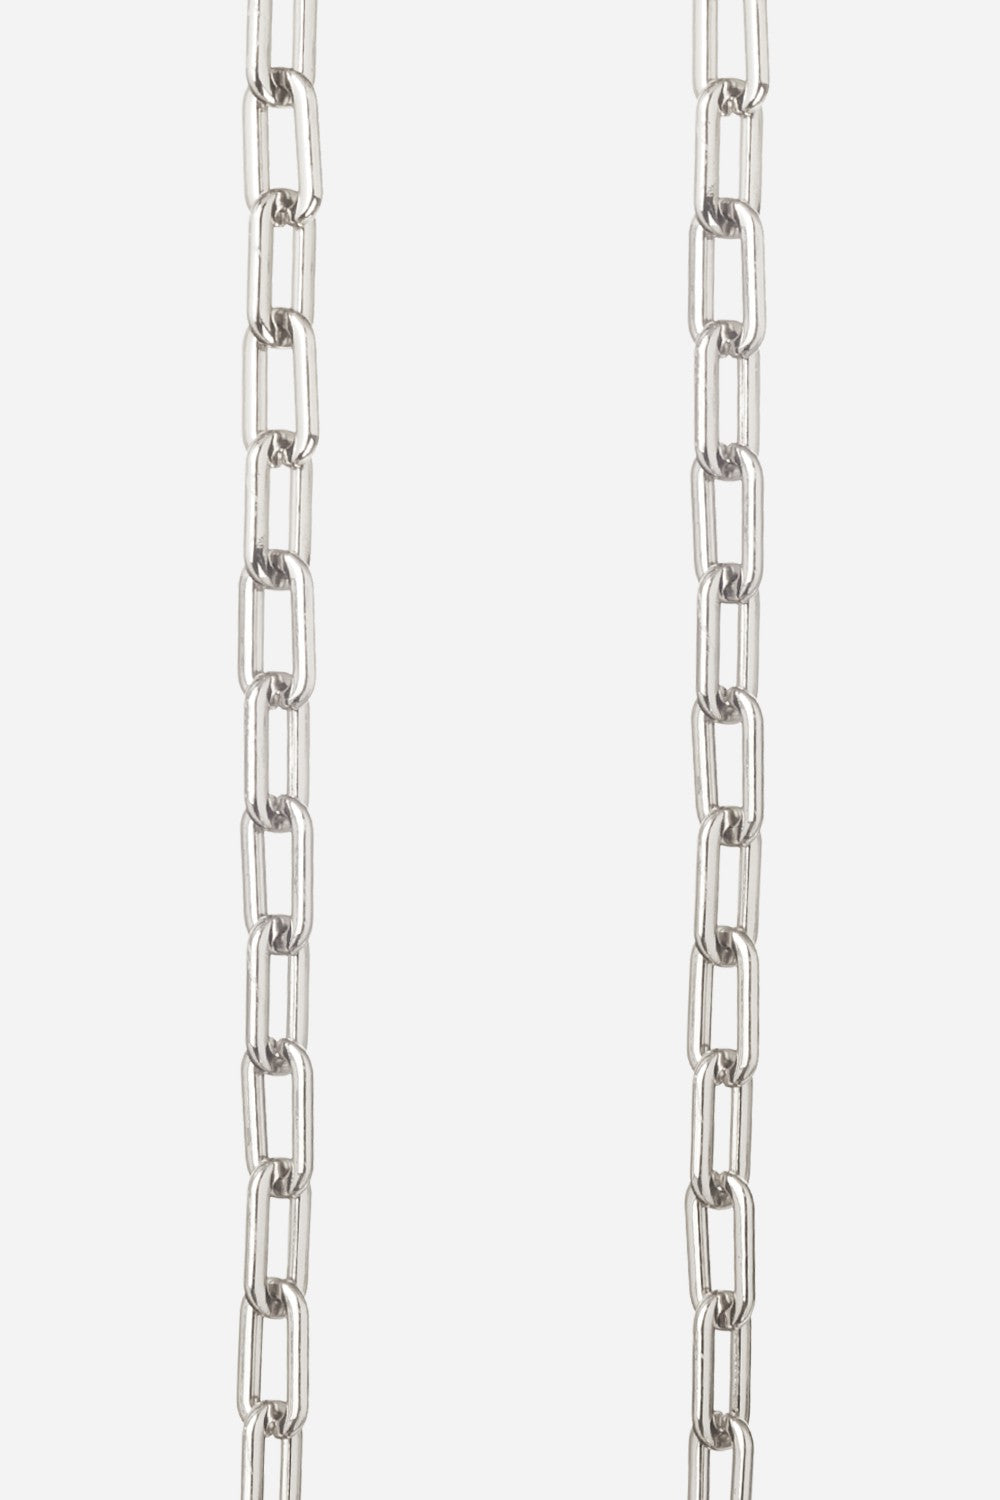 Mia Silver Long Chain 120 cm